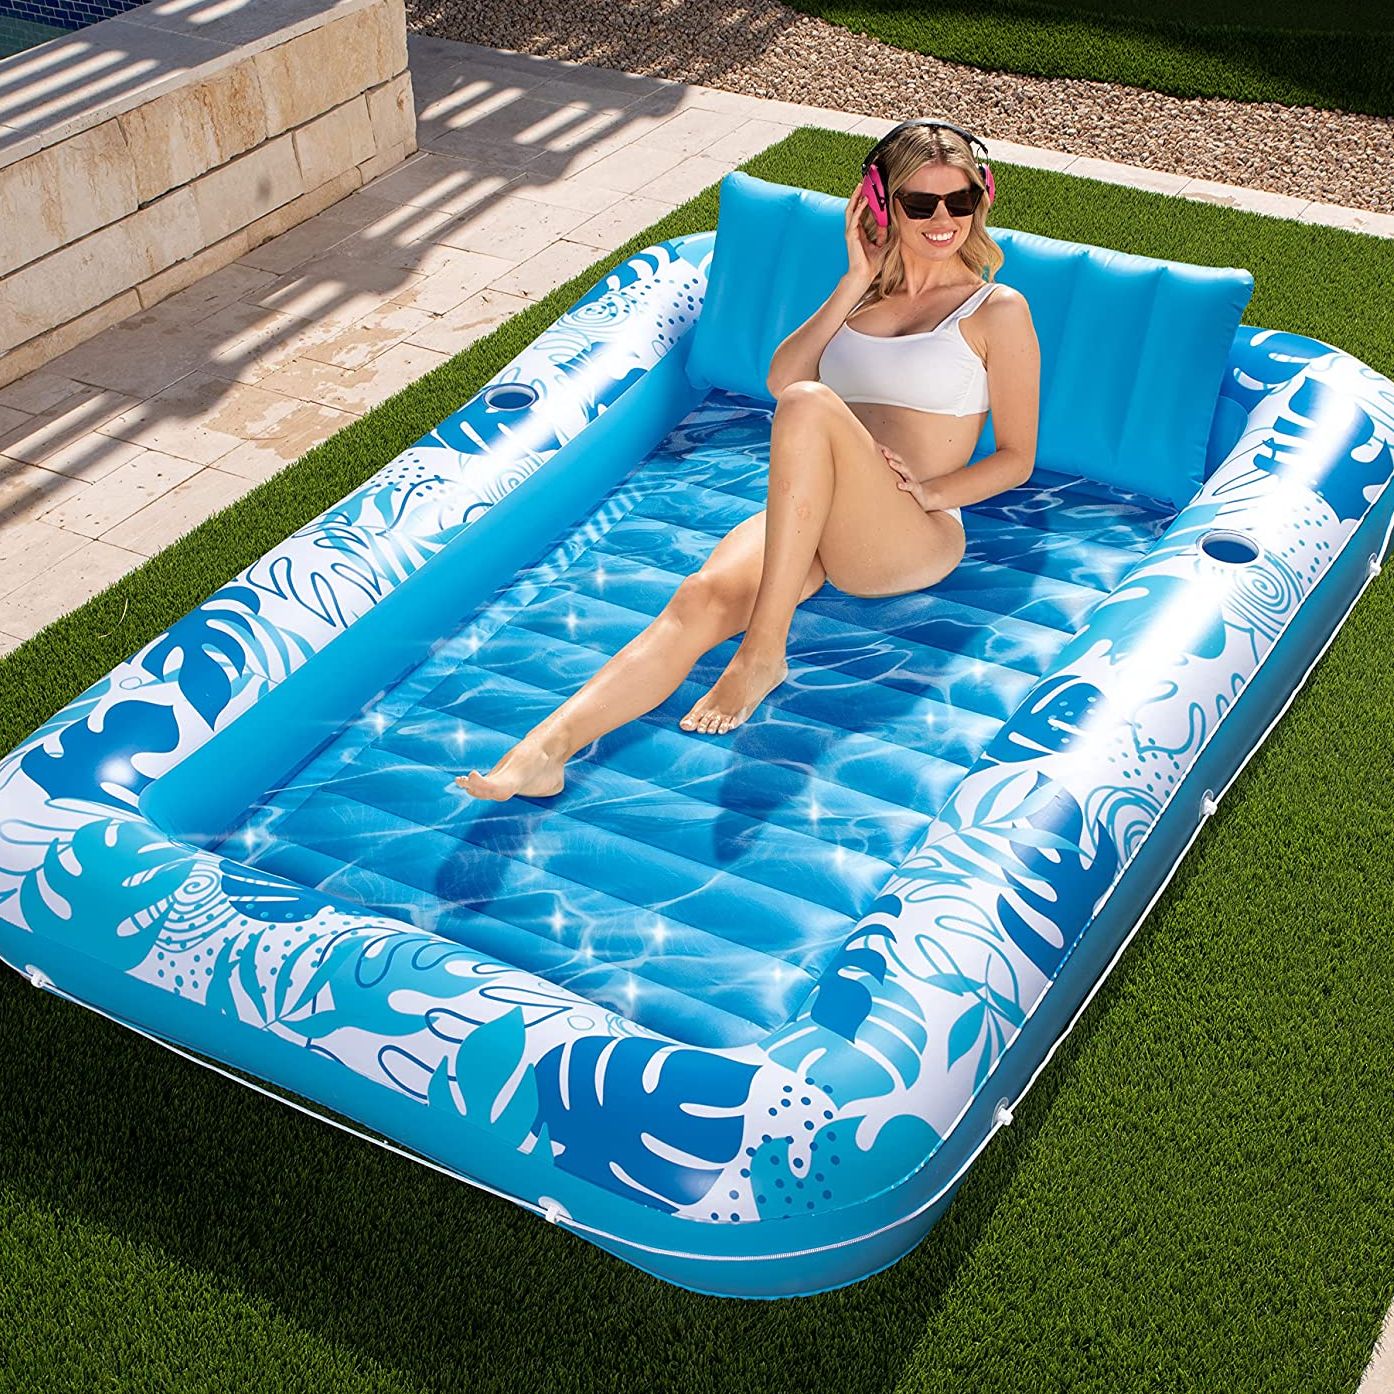 Everyone on TikTok Is Buying This Genius Sunbathing Tub From Amazon